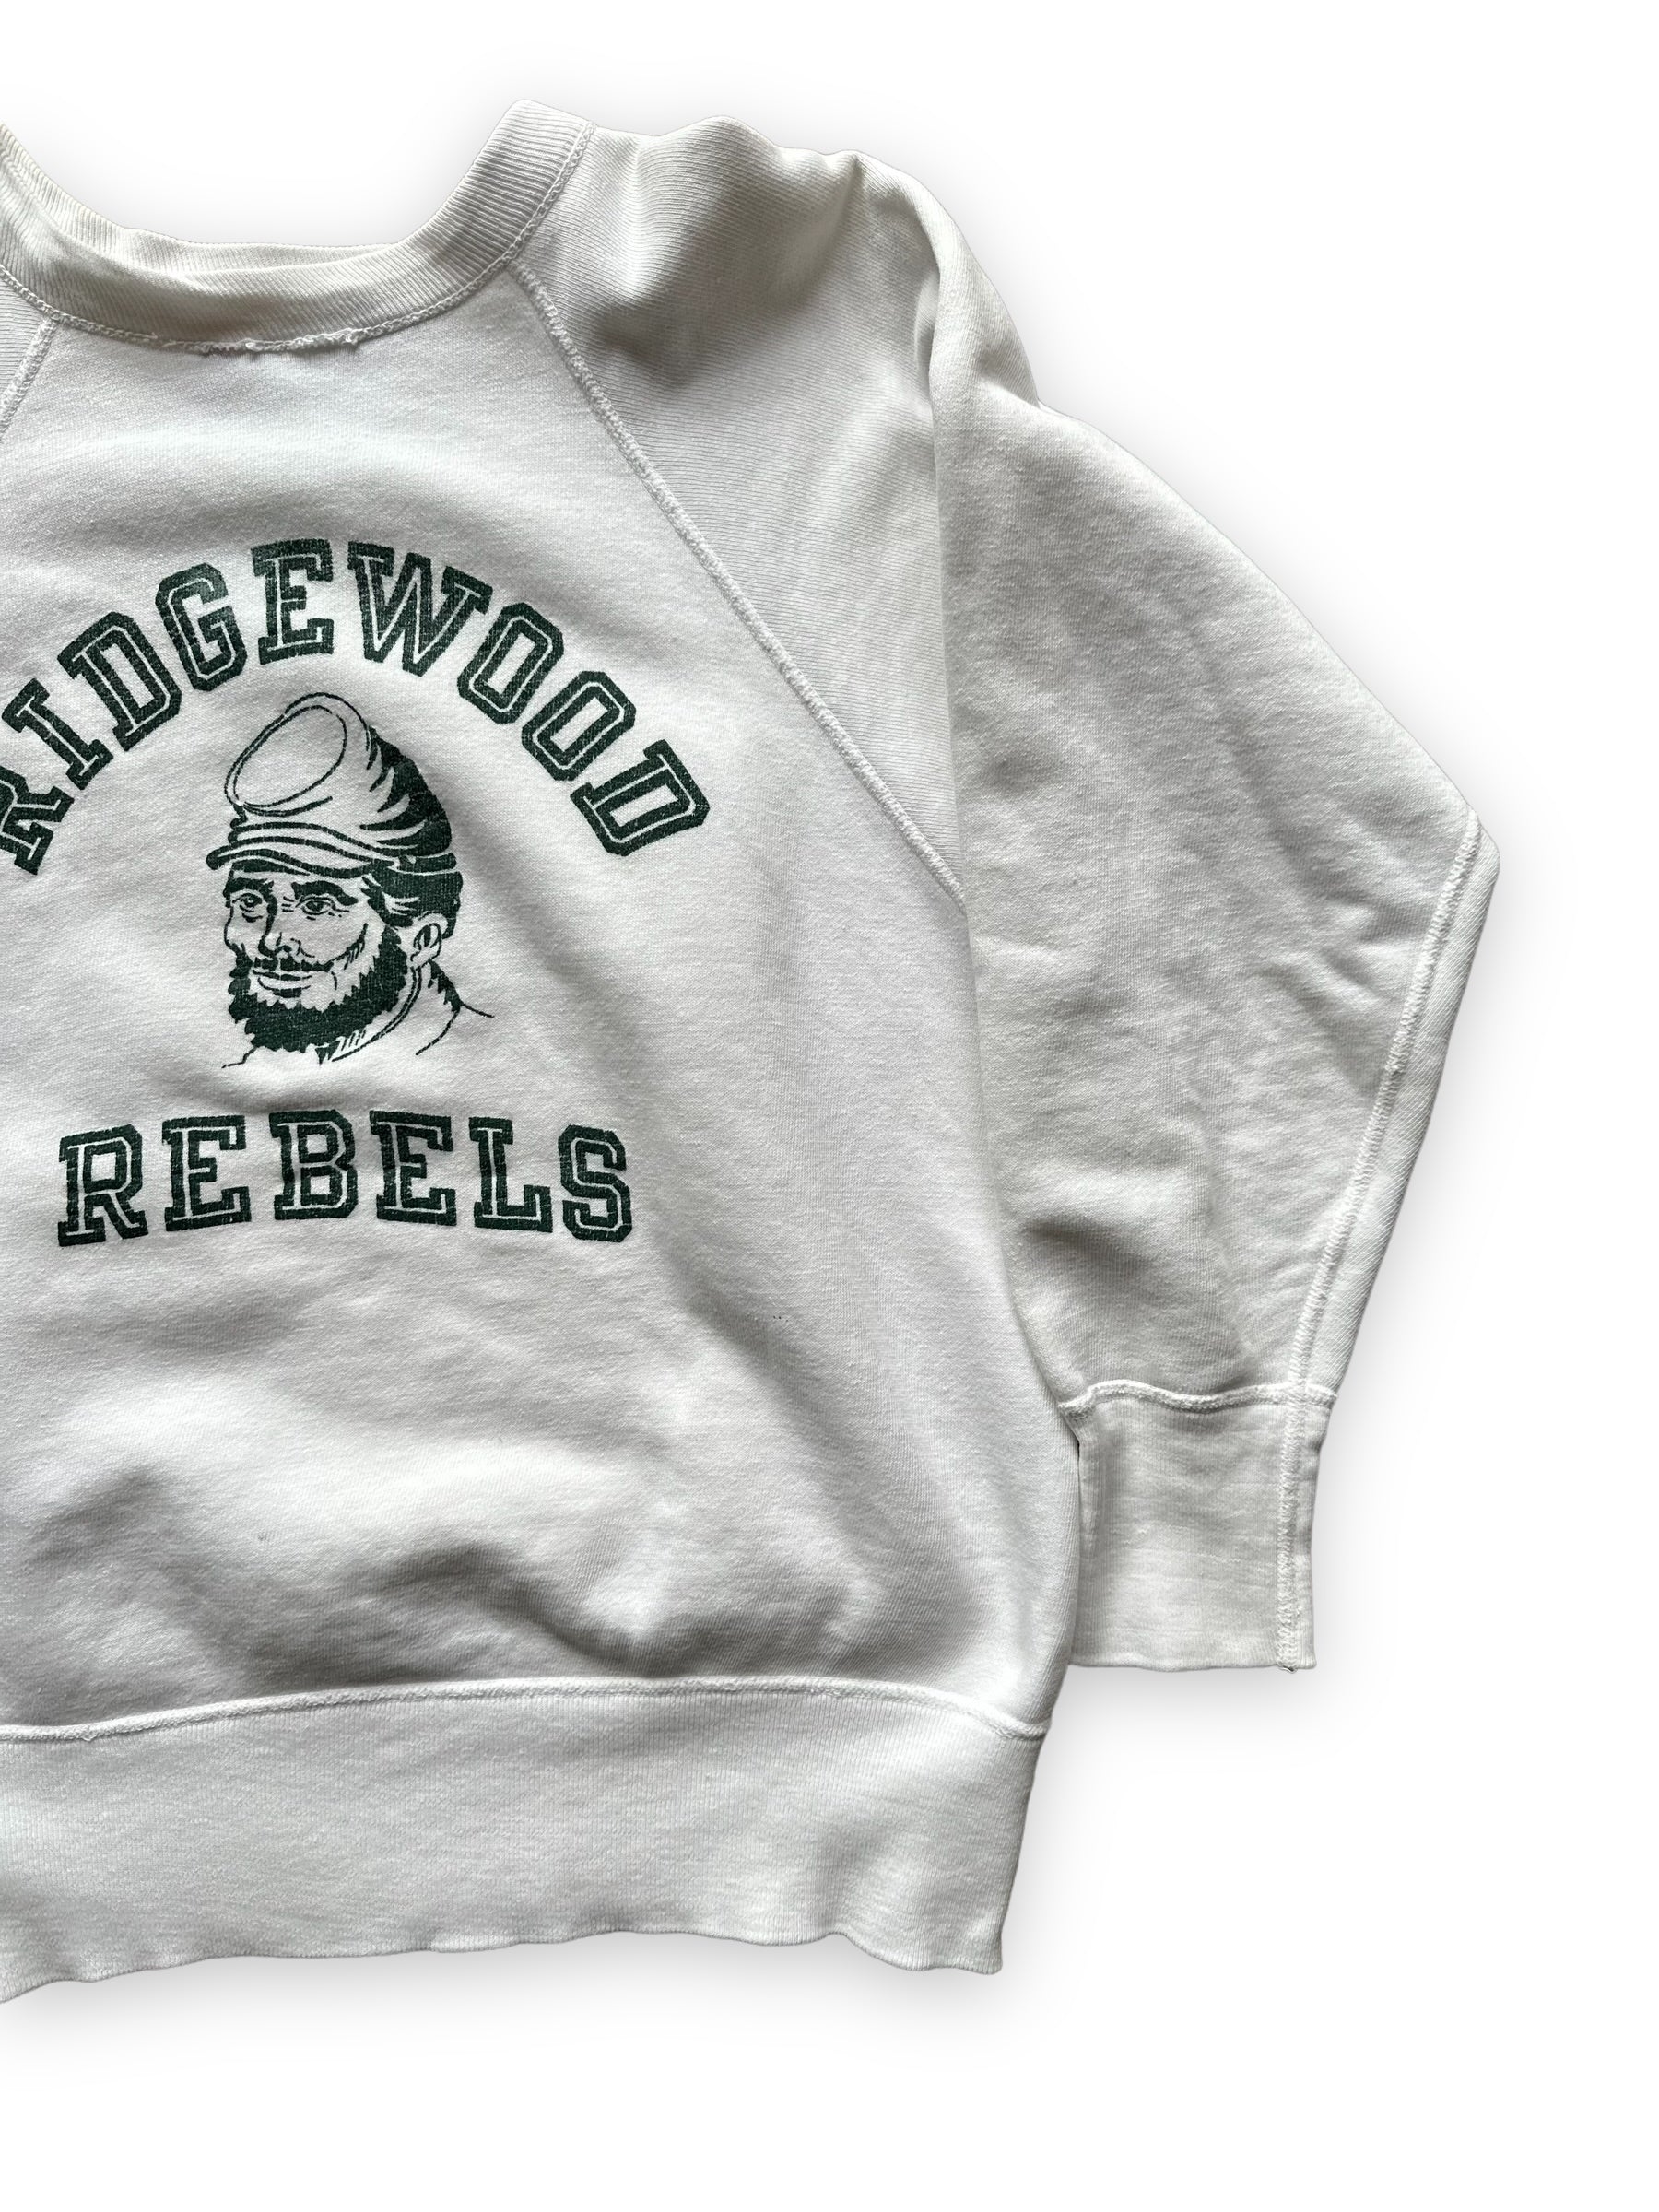 Left Front View on Vintage Champion Running Man Ridgewood Rebels Crewneck Sweatshirt | Vintage Champion Sweatshirt Seattle | Barn Owl Vintage Clothing